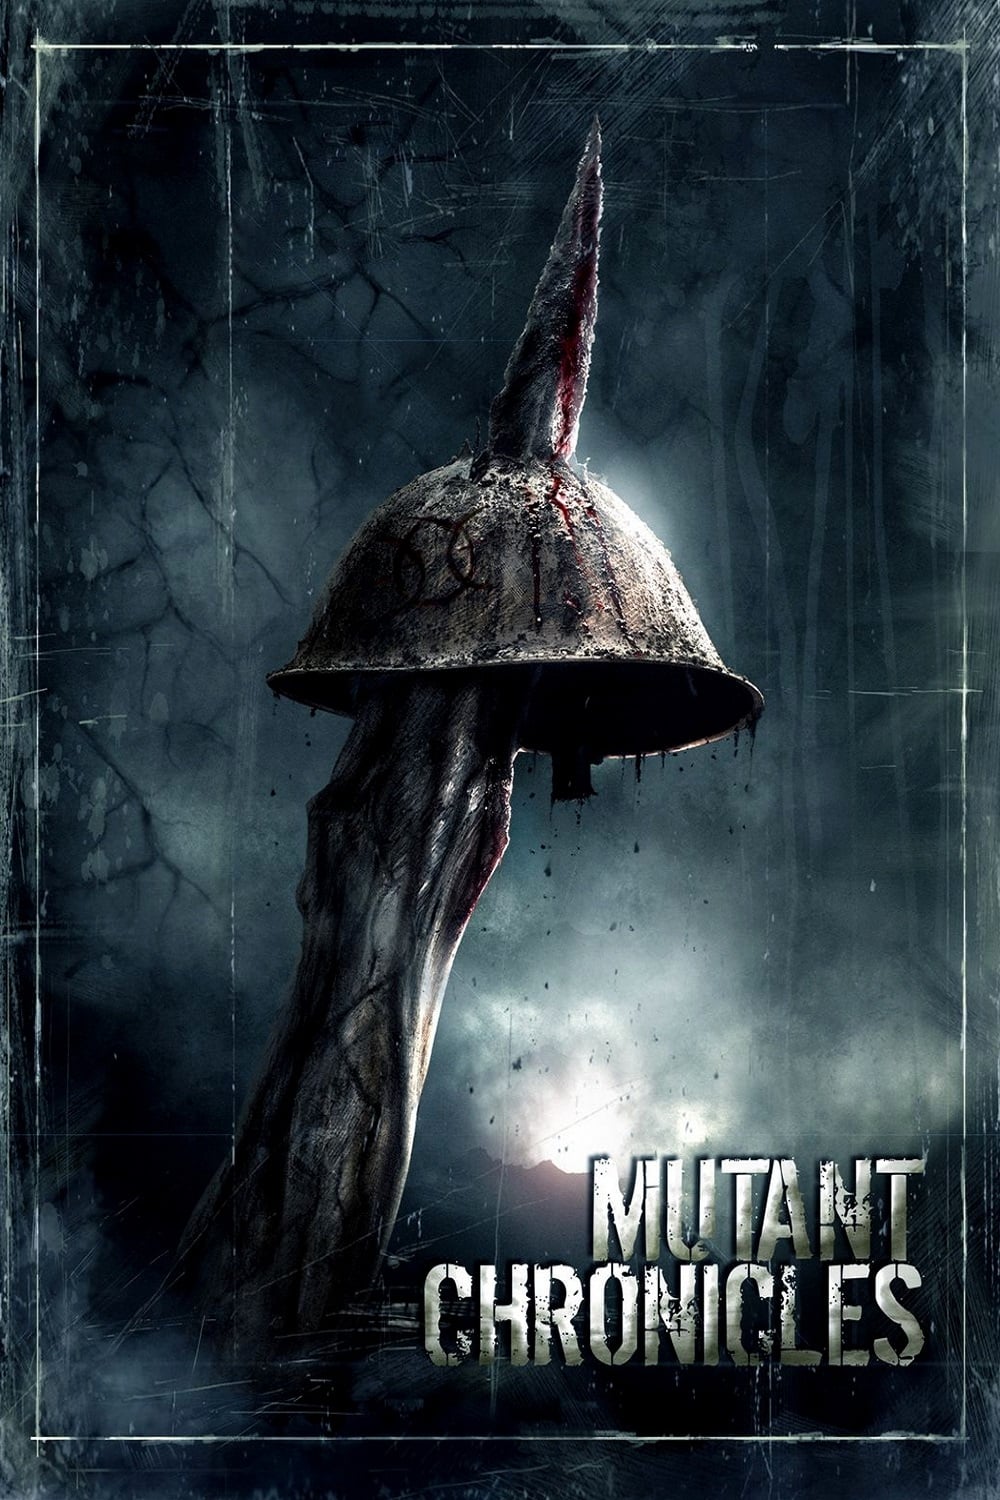 Plakat von "Mutant Chronicles"